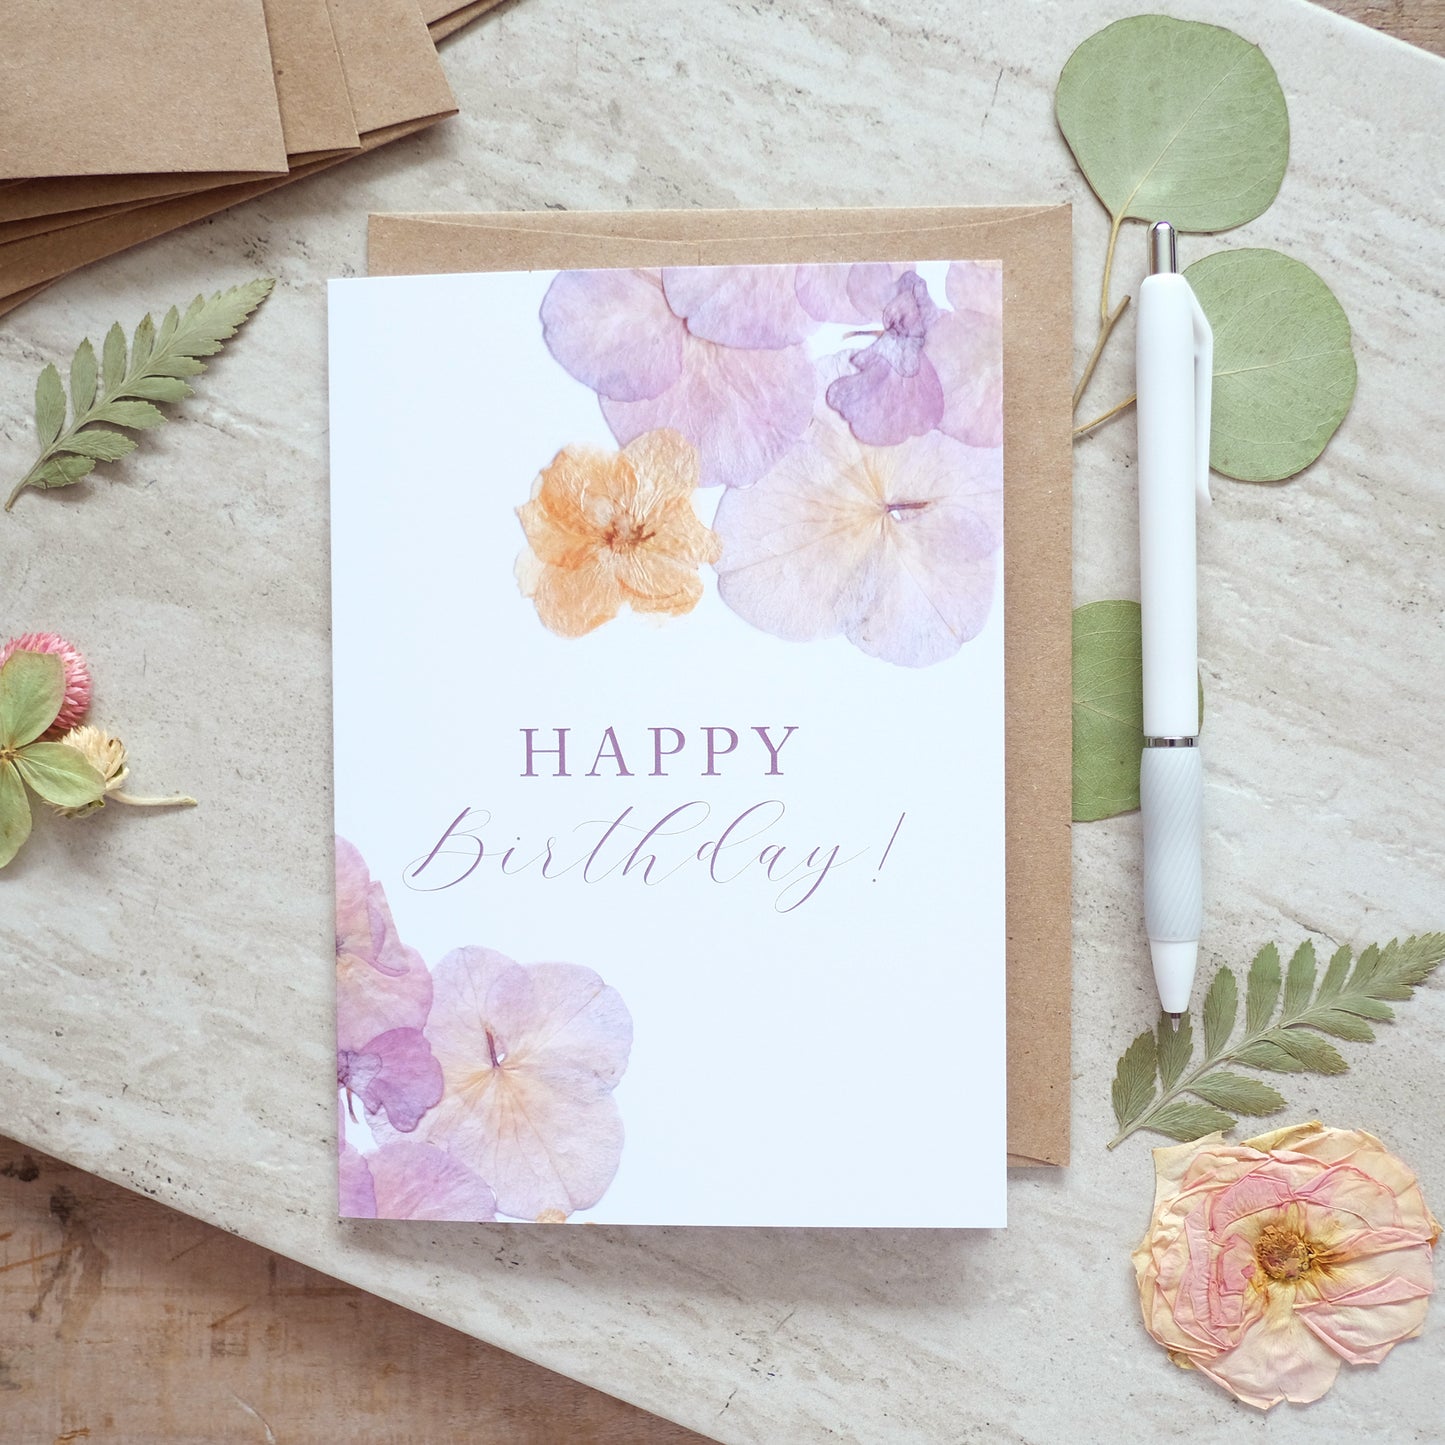 Happy Birthday Antique Purple Pansy, Large Card